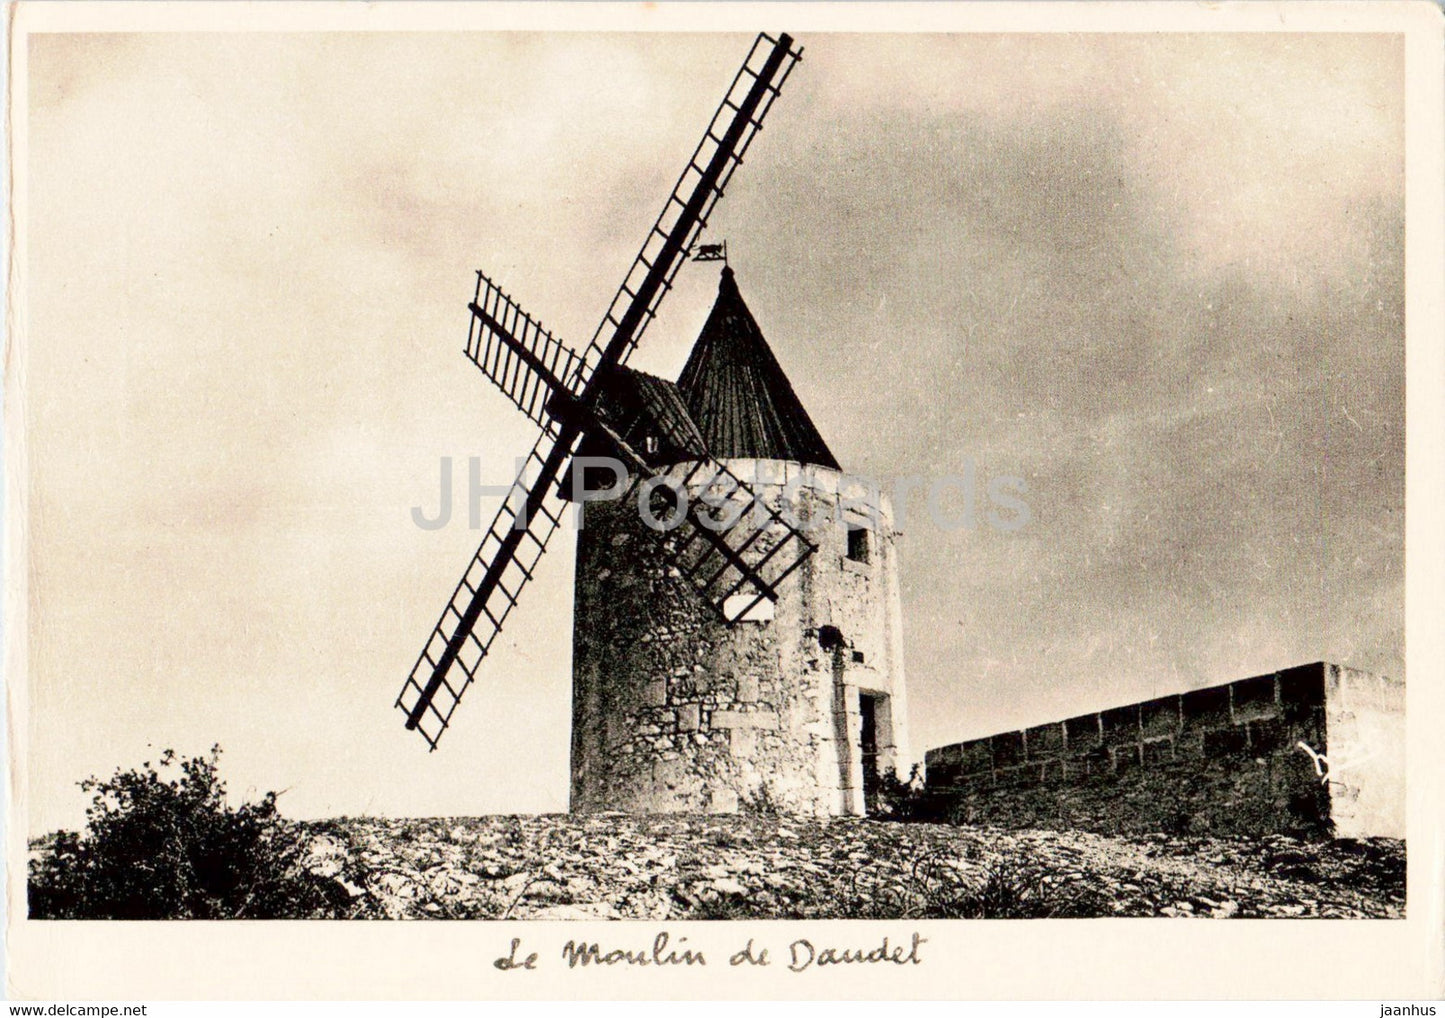 Le Moulin de Daudet - La Provence Romaine - windmill - old postcard - France - unused - JH Postcards